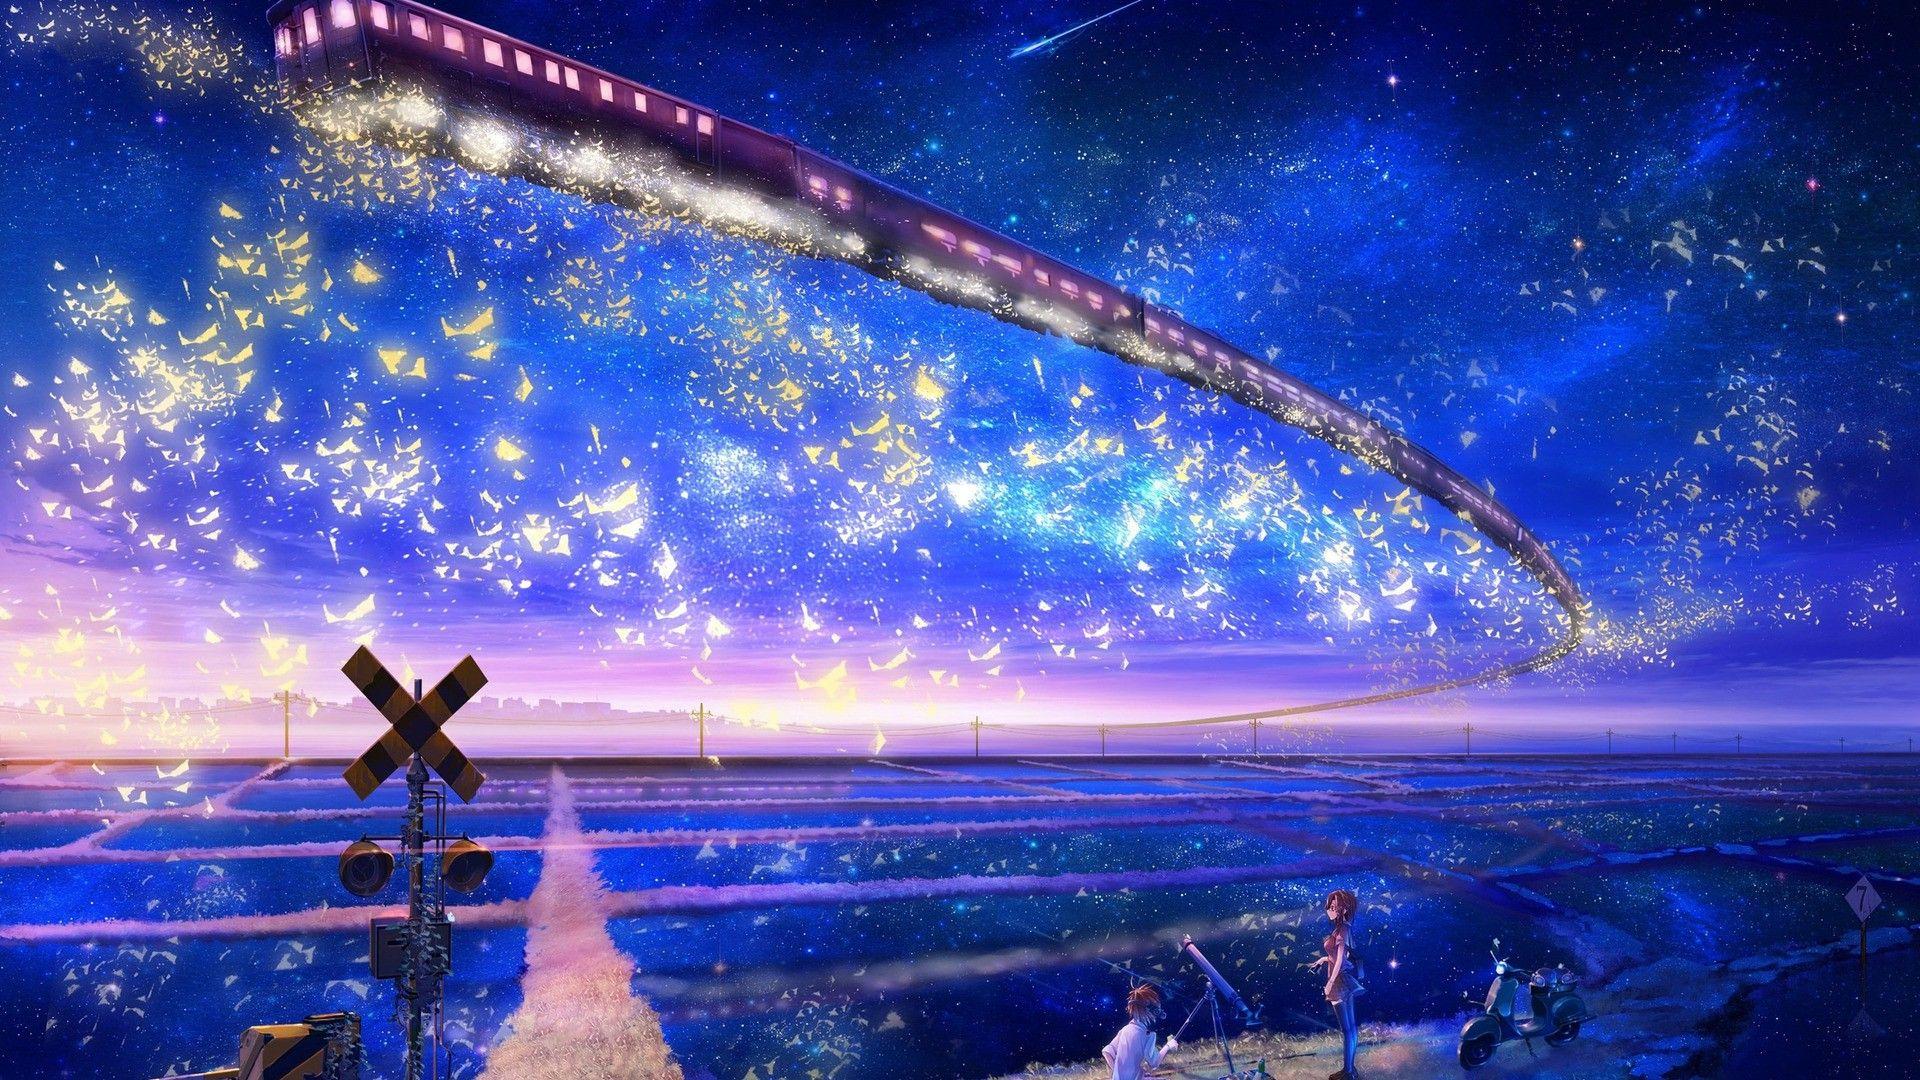 Download Beautiful Anime Galaxy Night Sky Wallpaper | Wallpapers.com